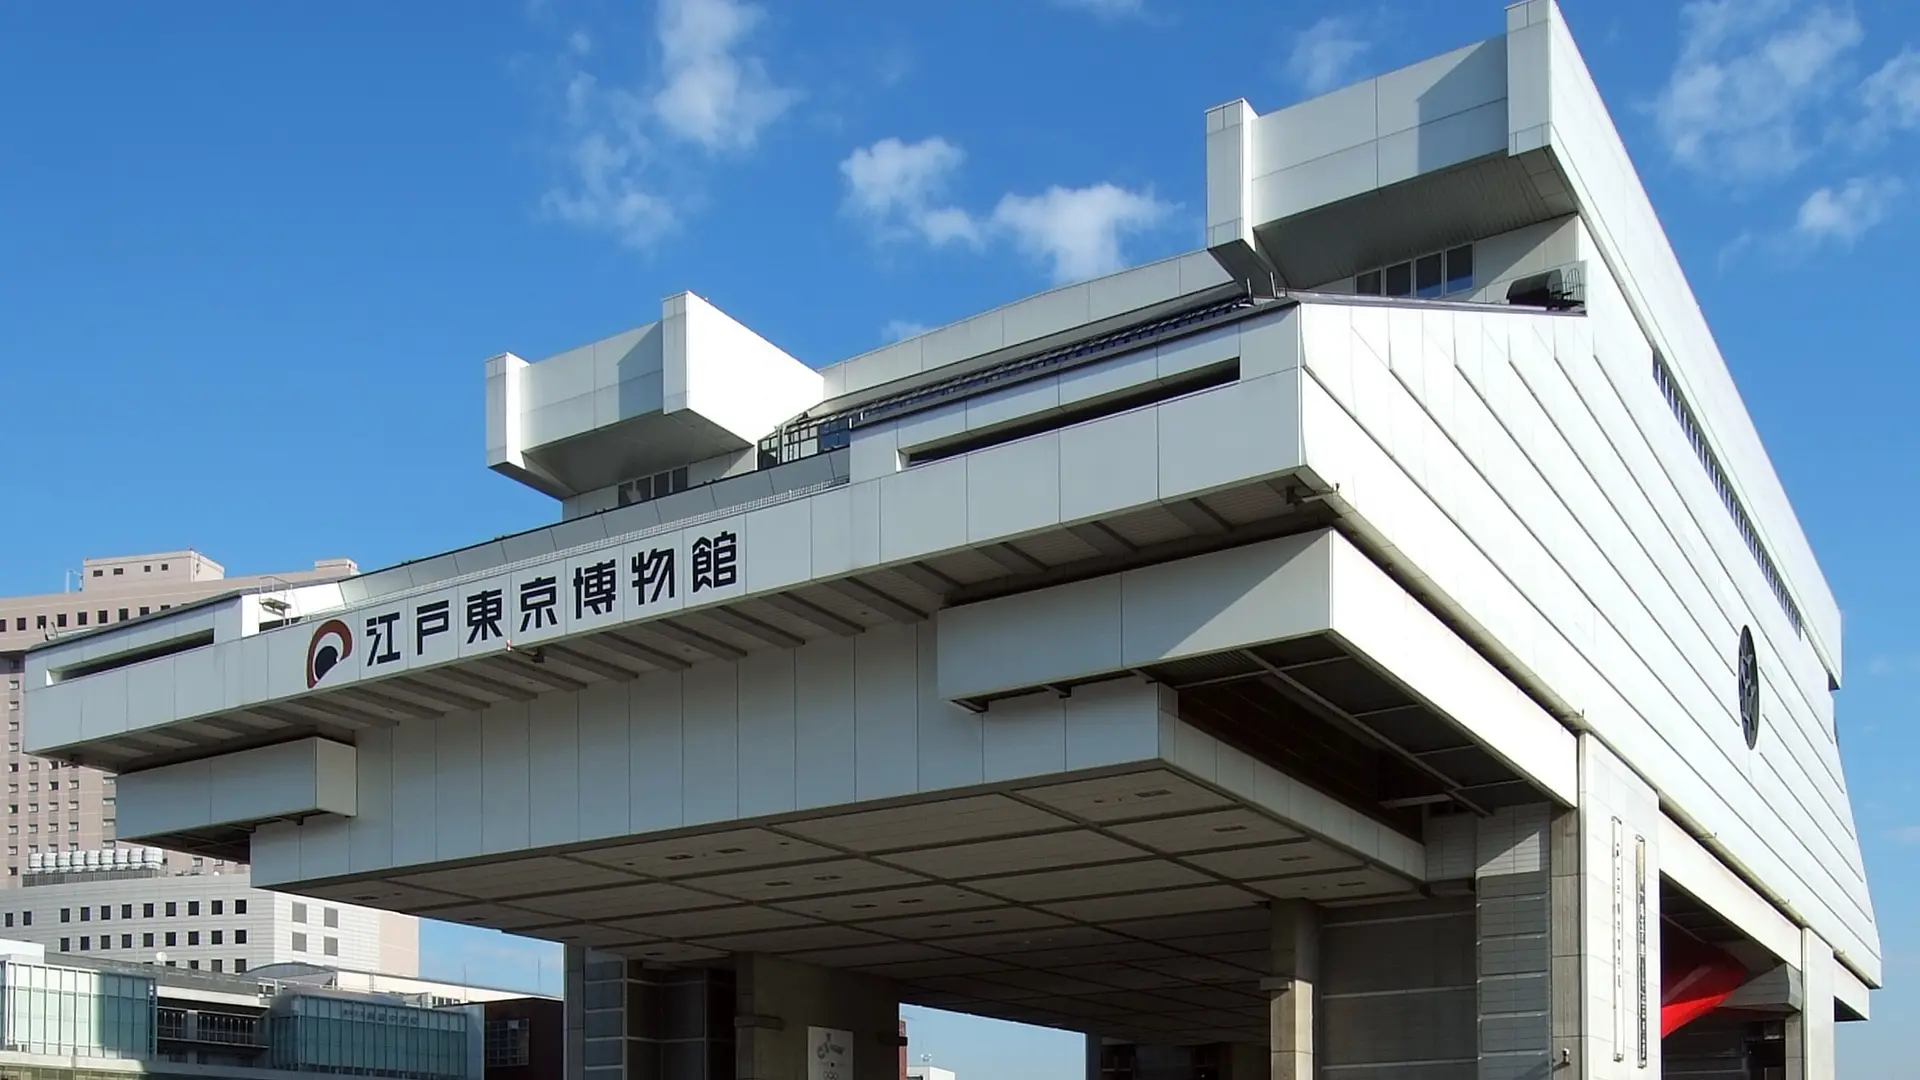 Edo-Tokyo, hospital looking building.